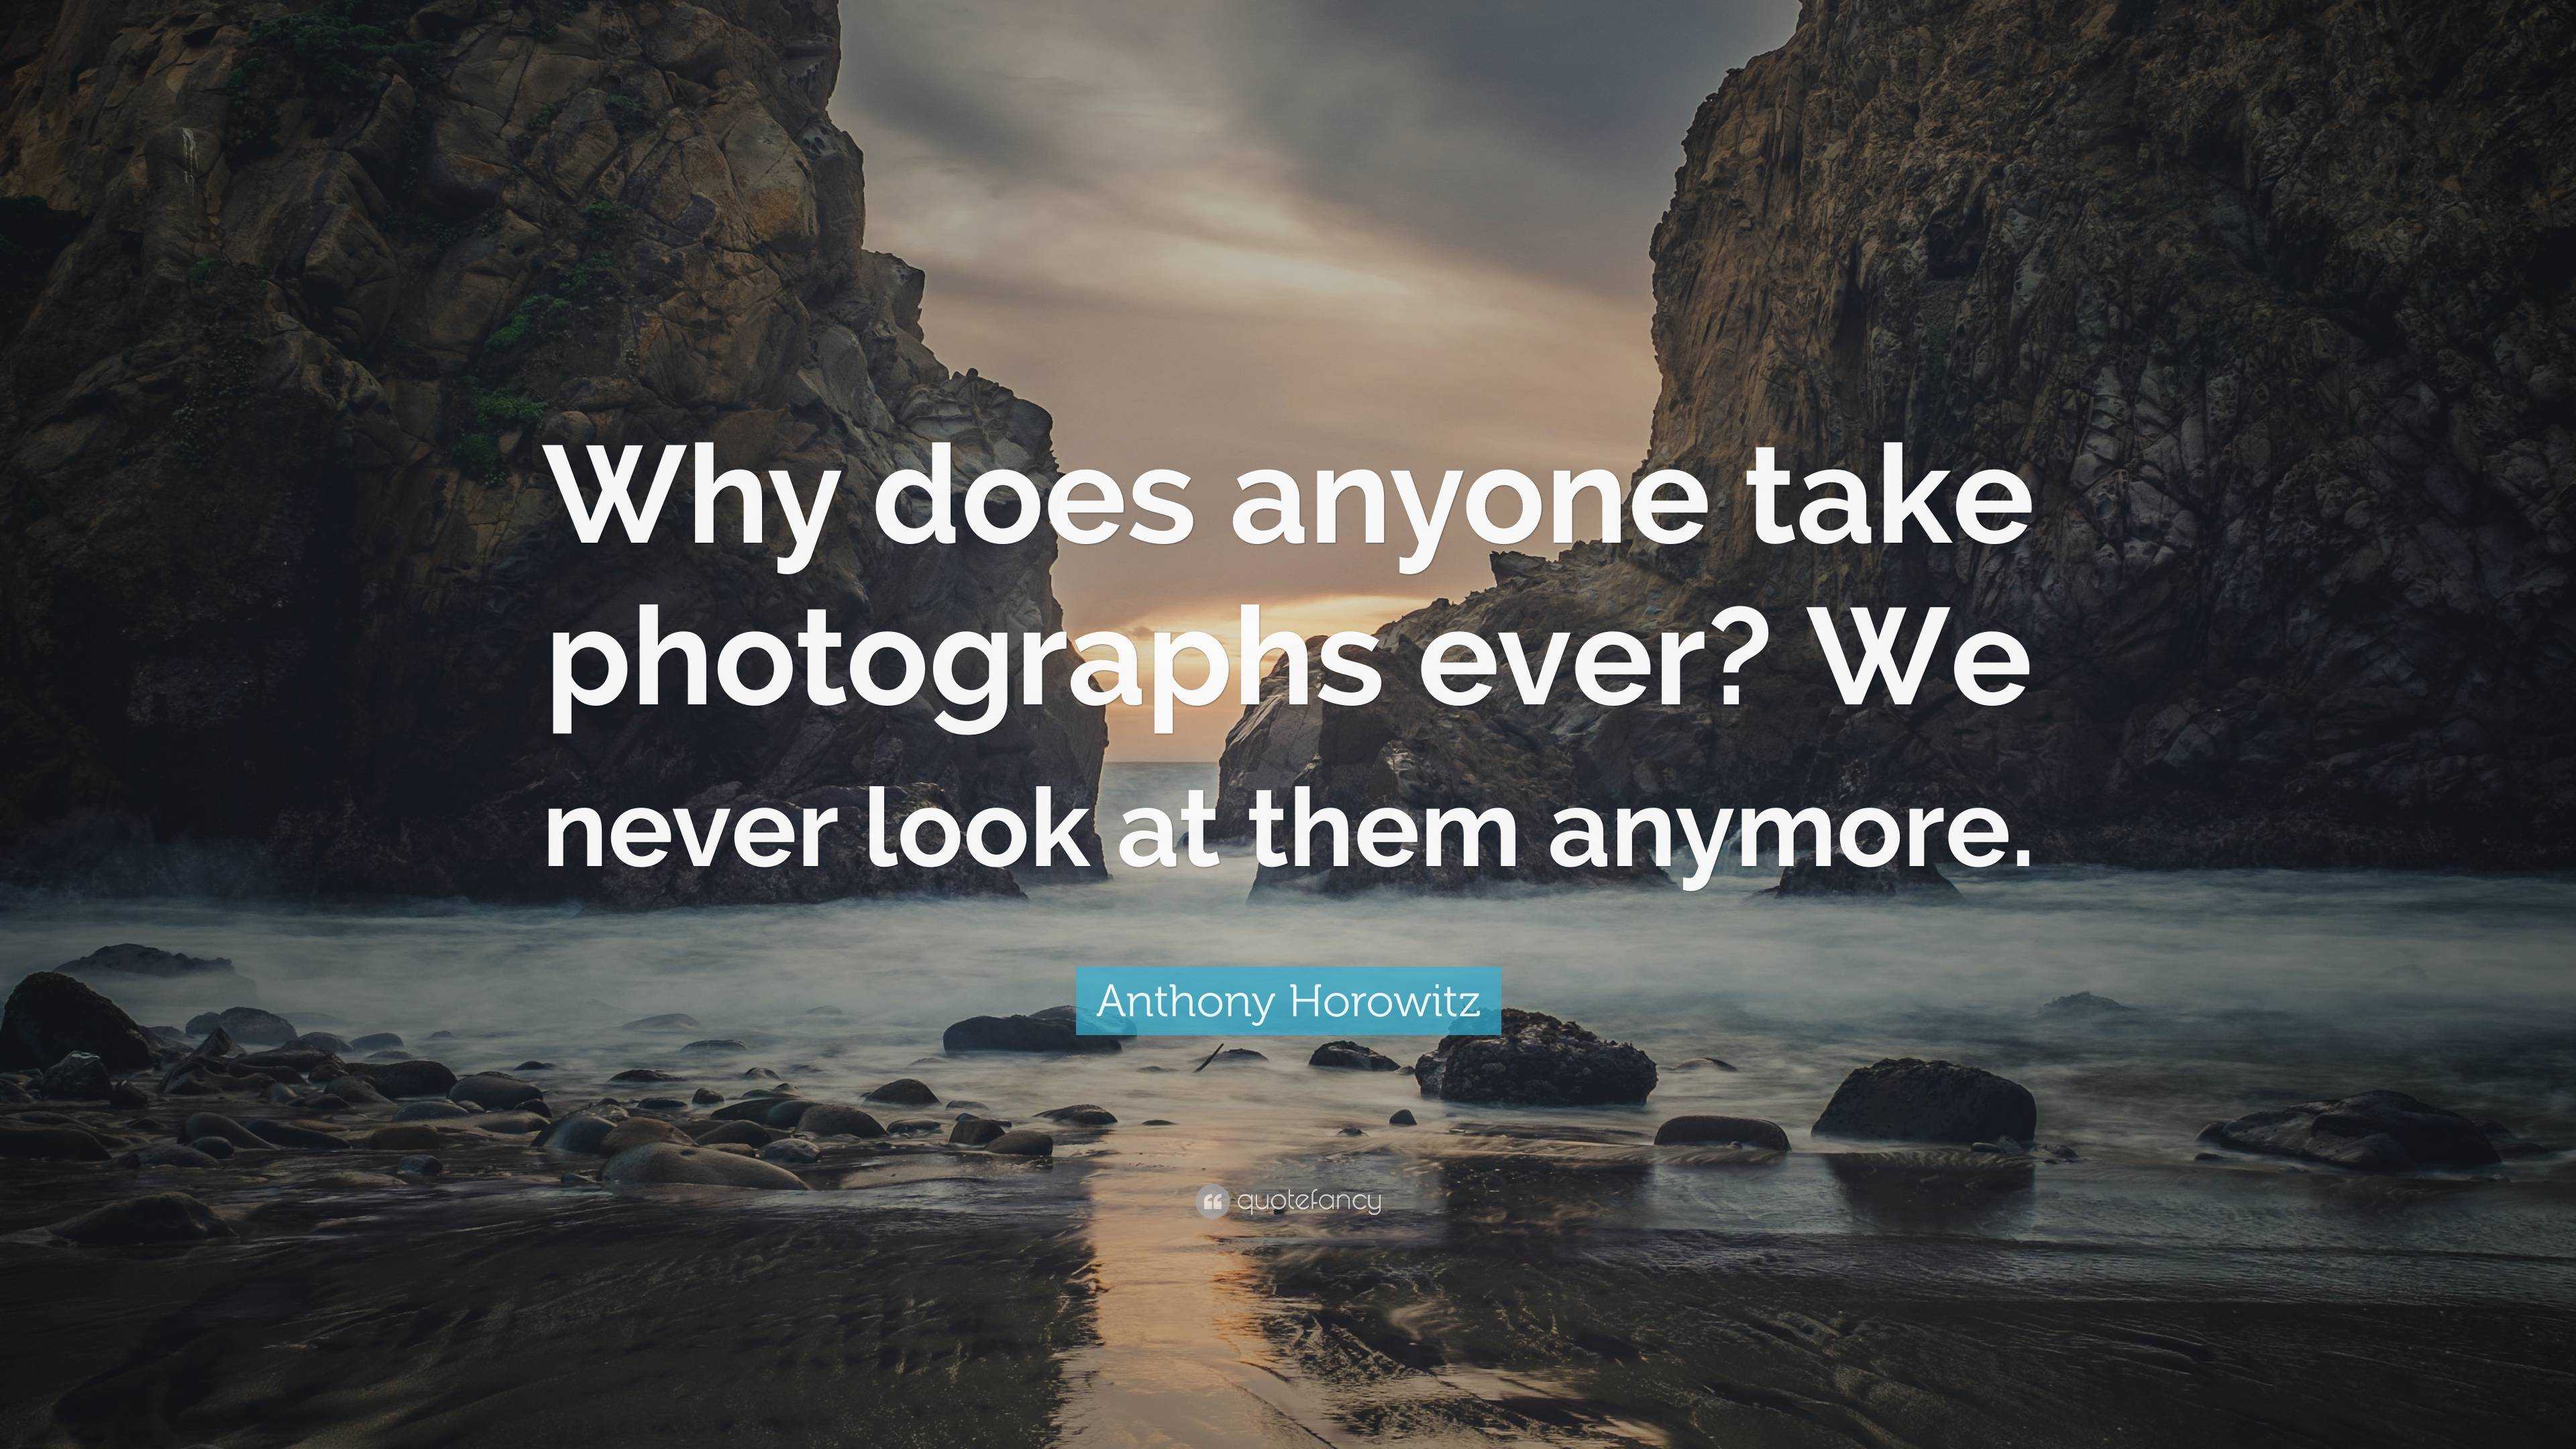 Anthony Horowitz Quote: “Why does anyone take photographs ever? We ...